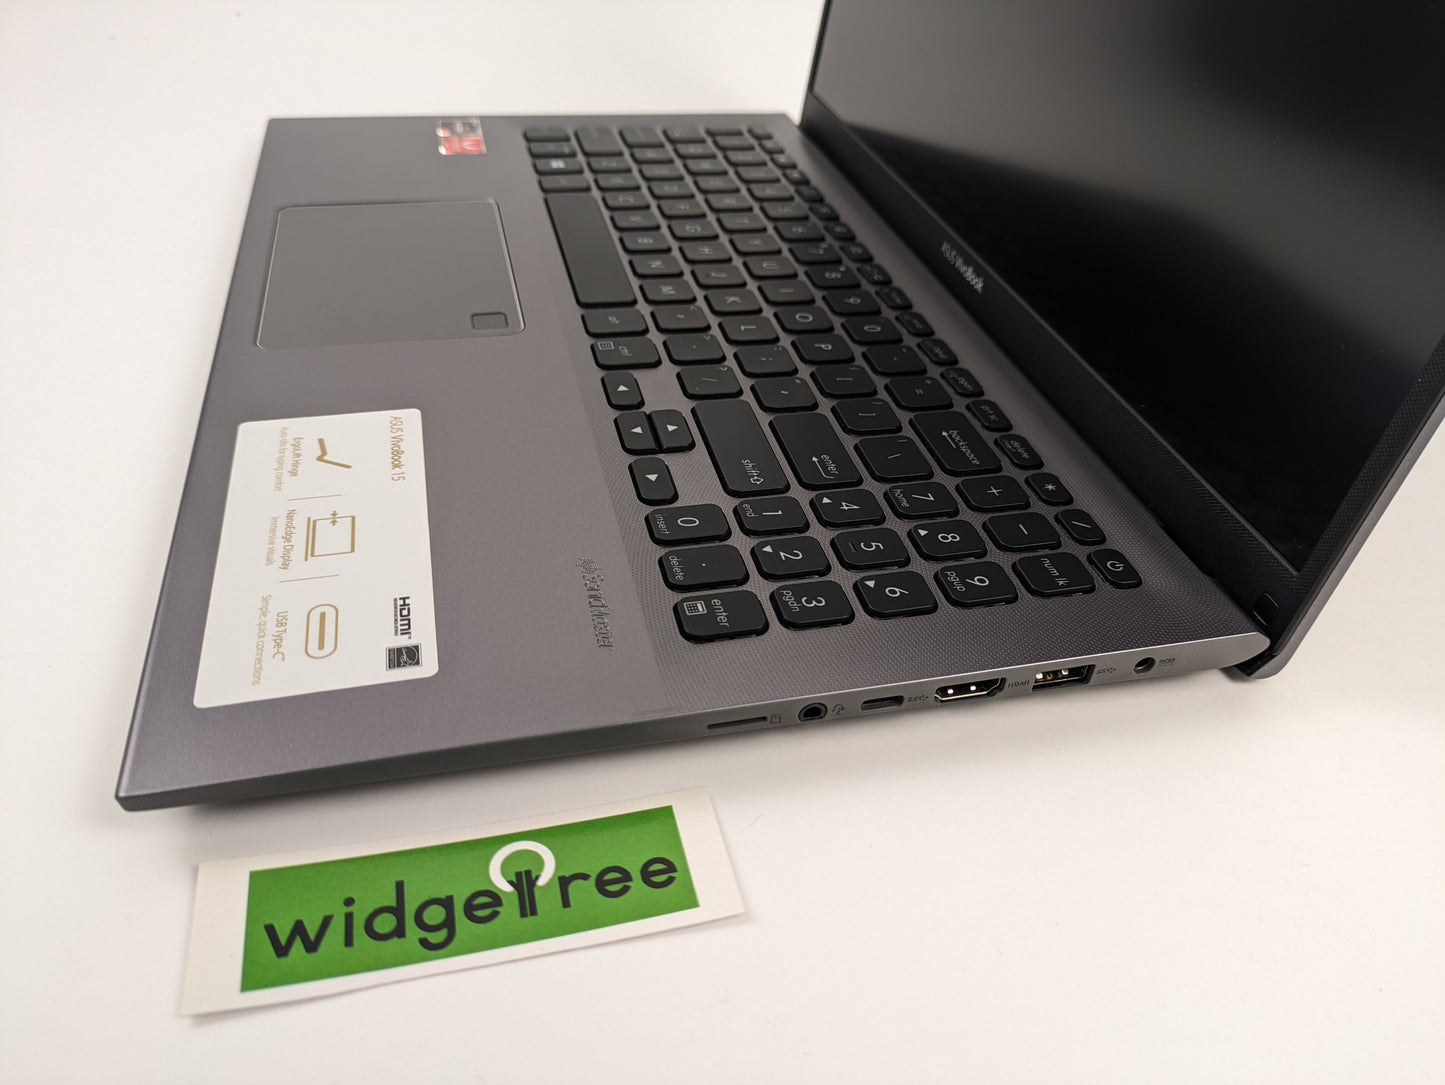 Asus VivoBook F512DA-RS51 15.6" Ryzen 5 8GB 512GB SSD Laptop - 90NB0LZ3-M03220 Used